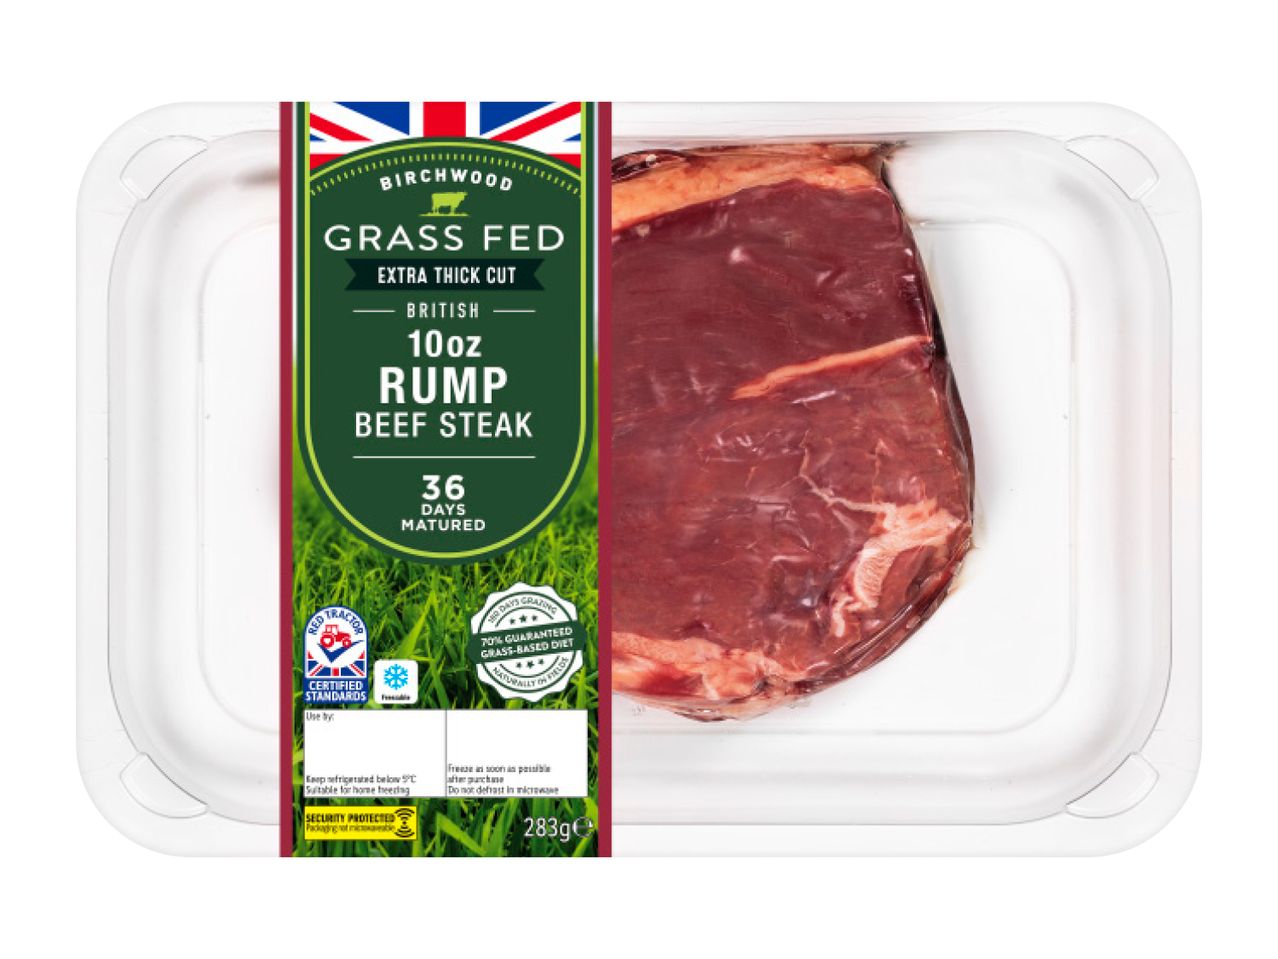 Go to full screen view: Birchwood Grass Fed 10oz British Beef 36-Day Matured Rump Steak - Image 1